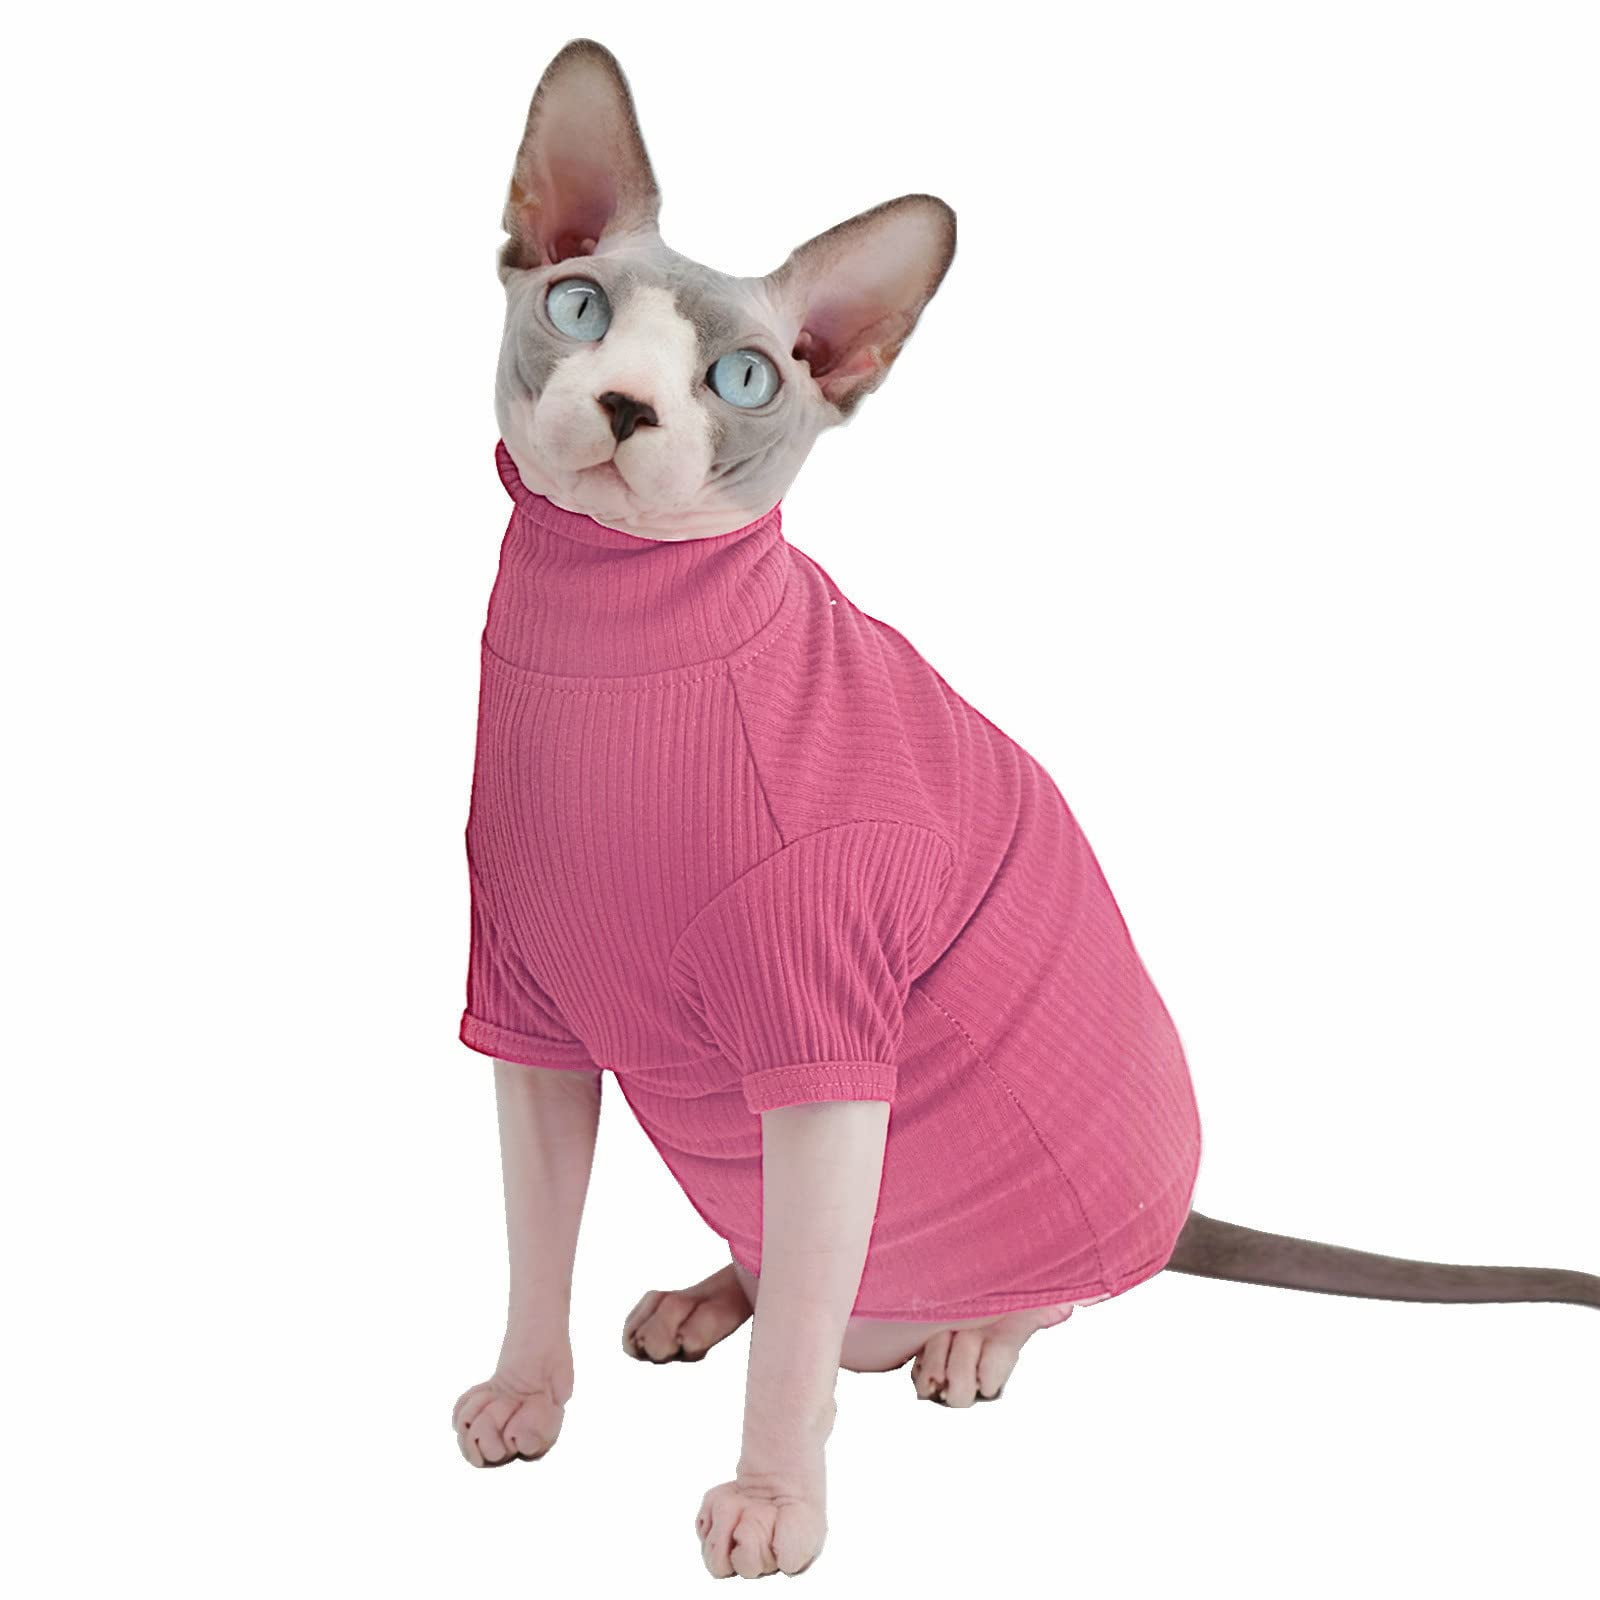 Sphynx Cat Turtleneck | Cat Turtleneck Sweater, Hairless Cat Turtleneck